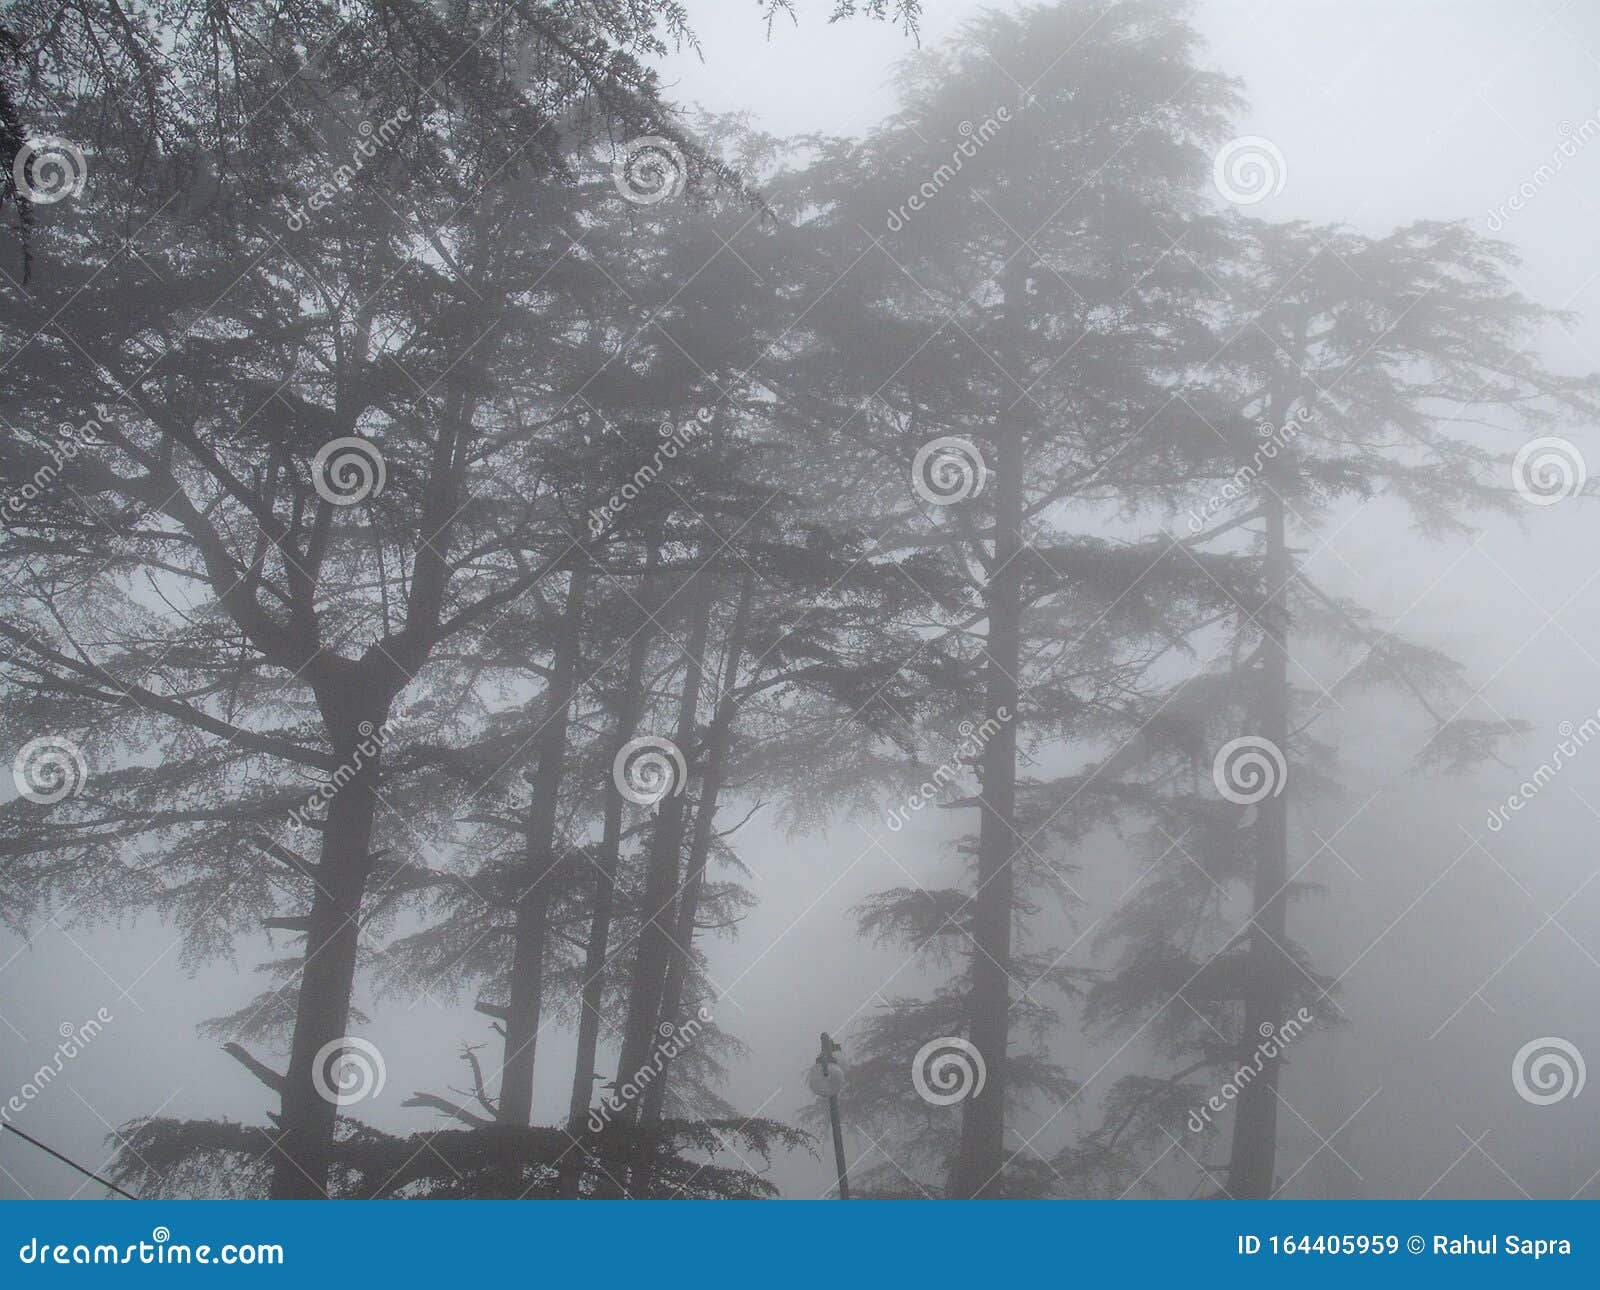 fog in the forest, big high trees in kashmir, kashmir big trees